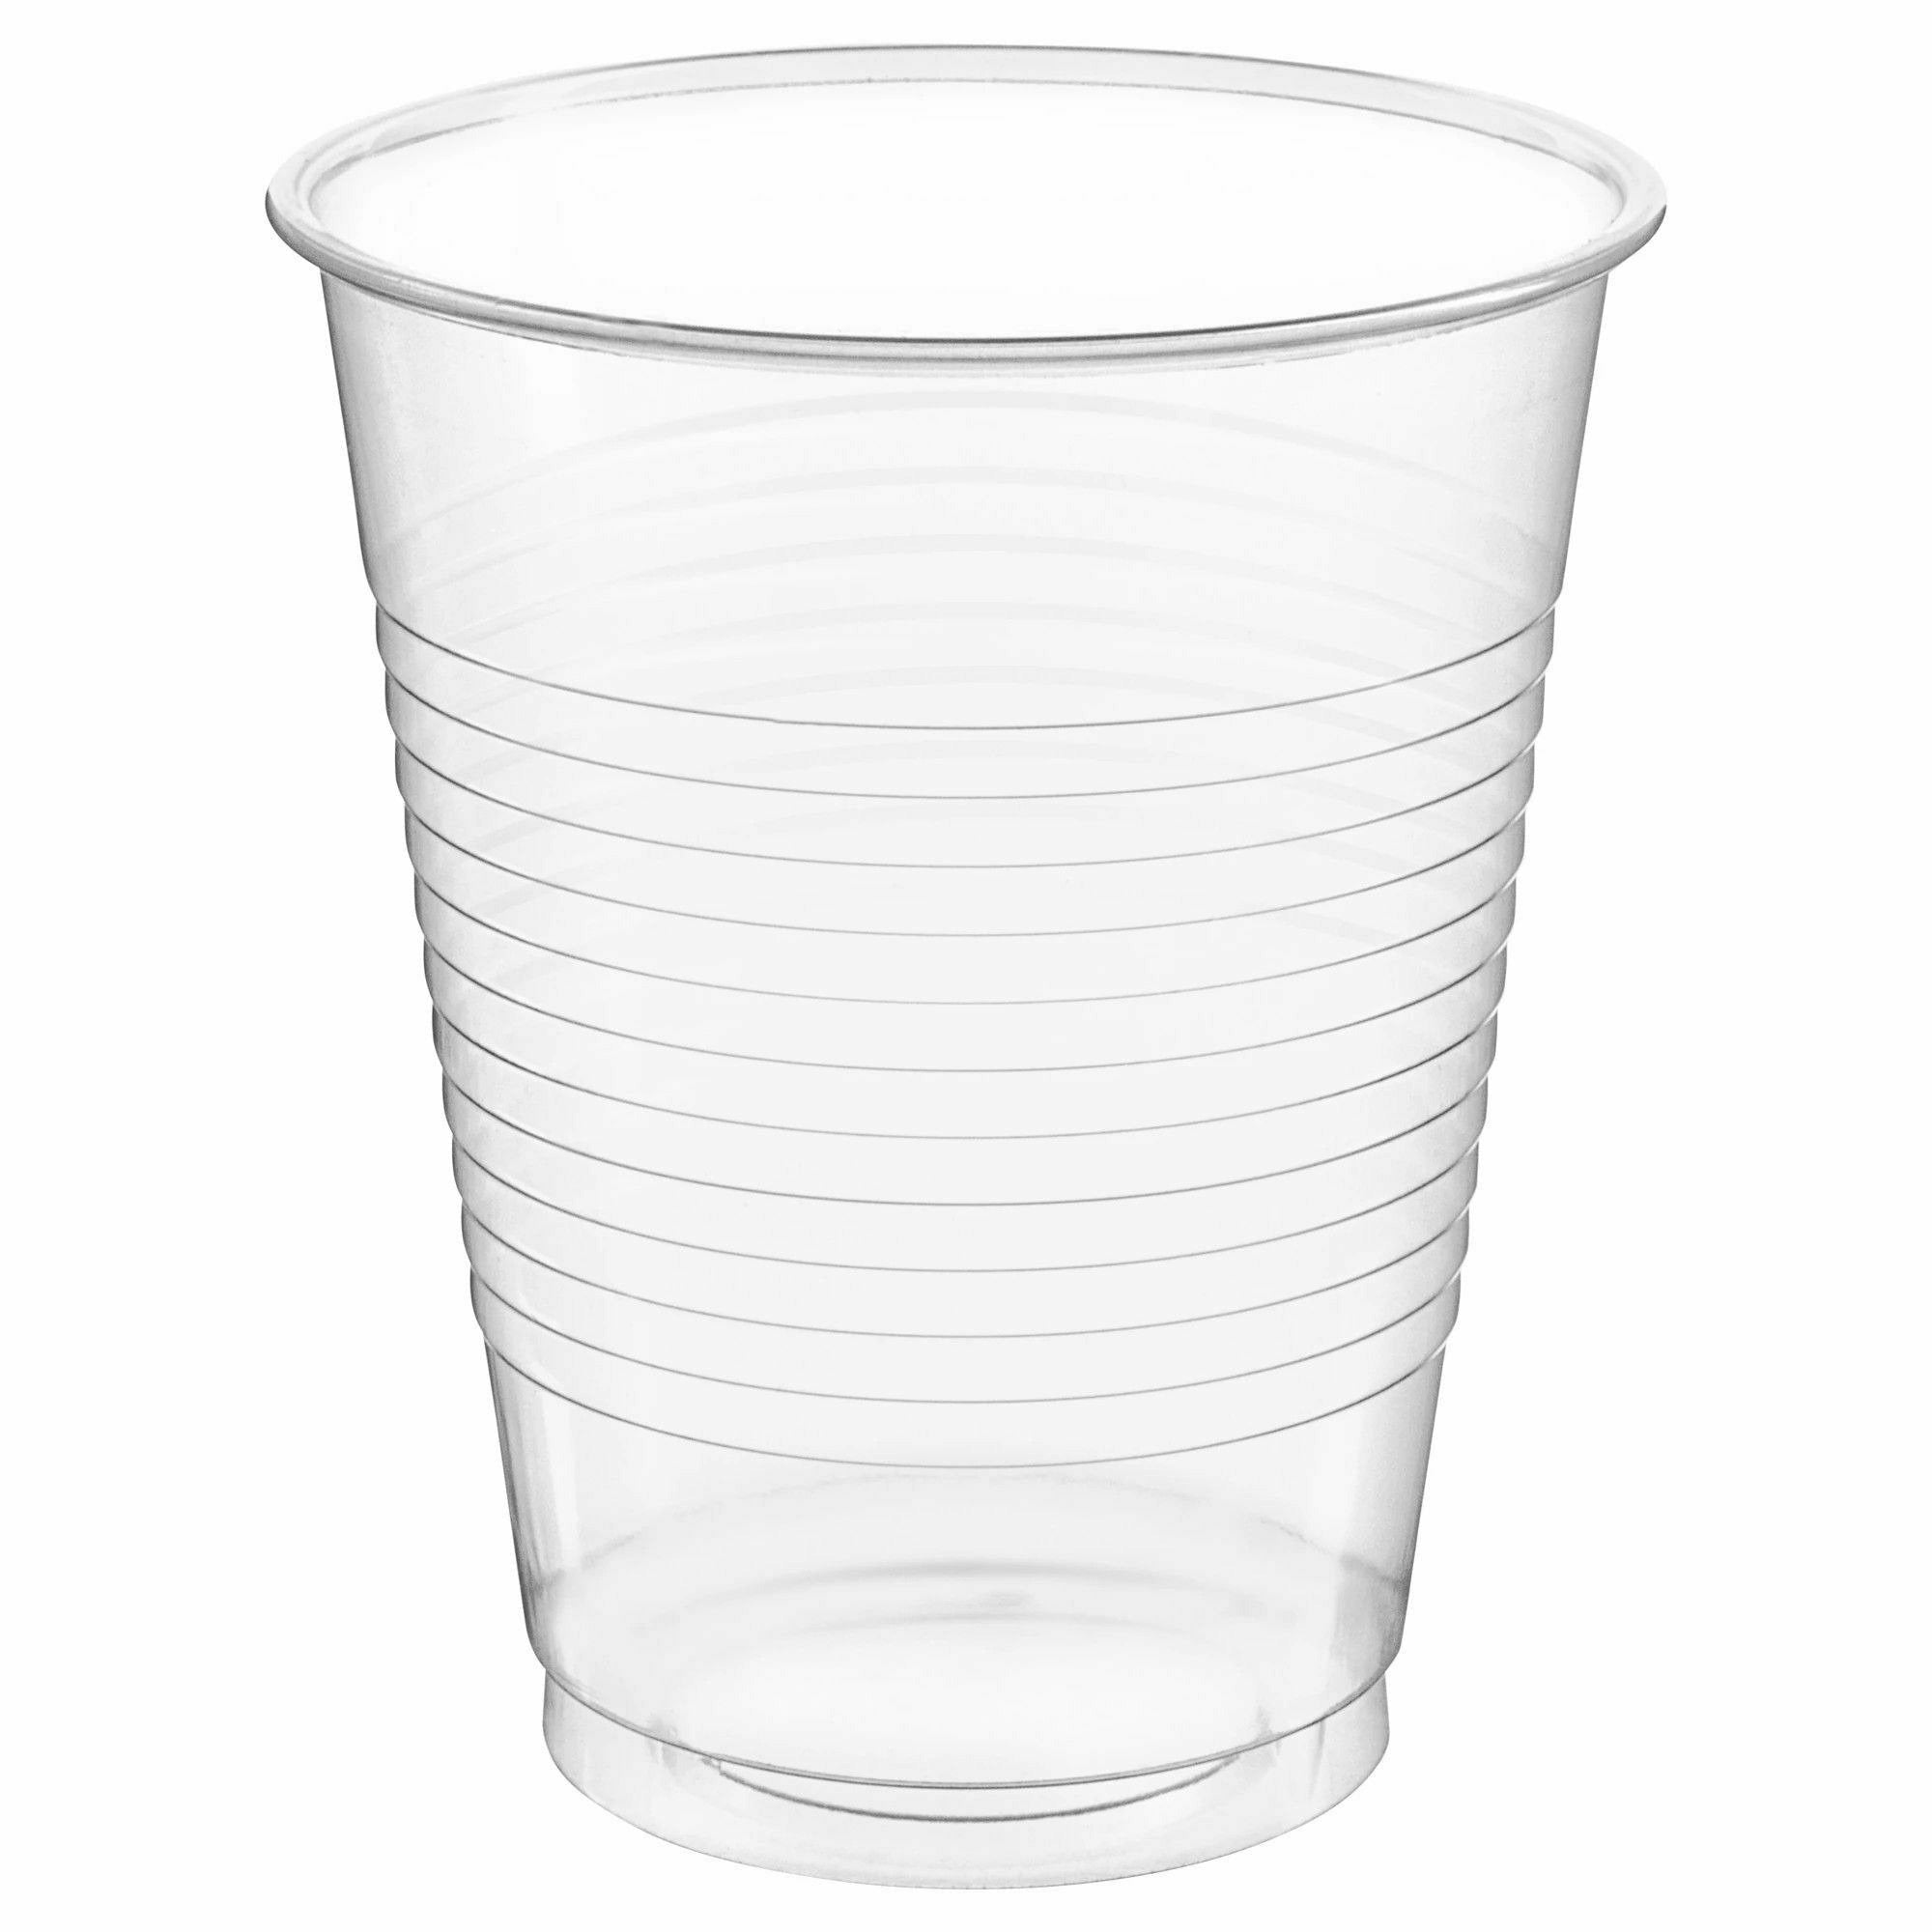 Amscan BASIC Clear - 18 oz. Plastic Cups, 20 Ct.